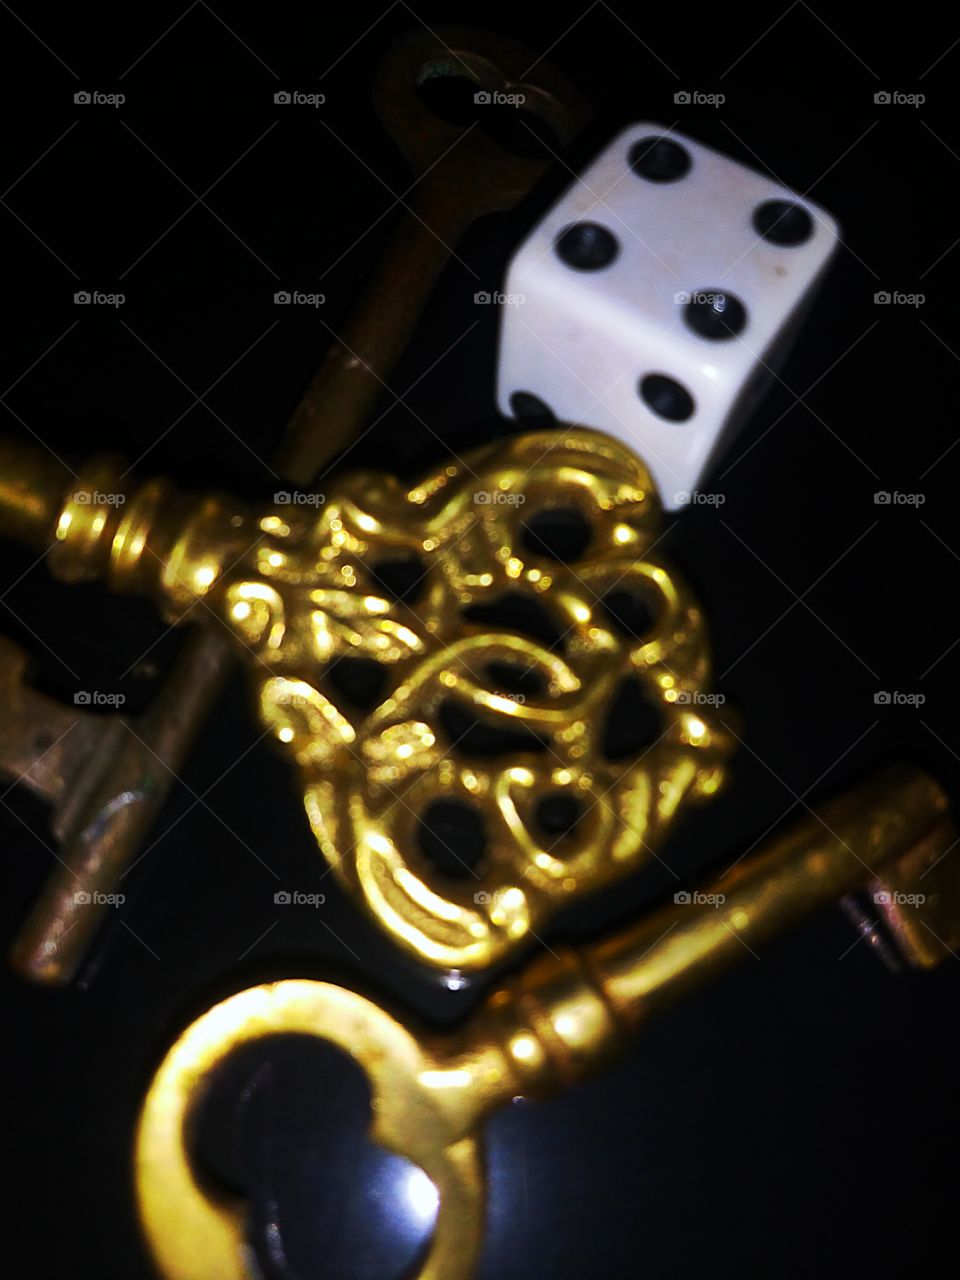 skeleton keys & dice